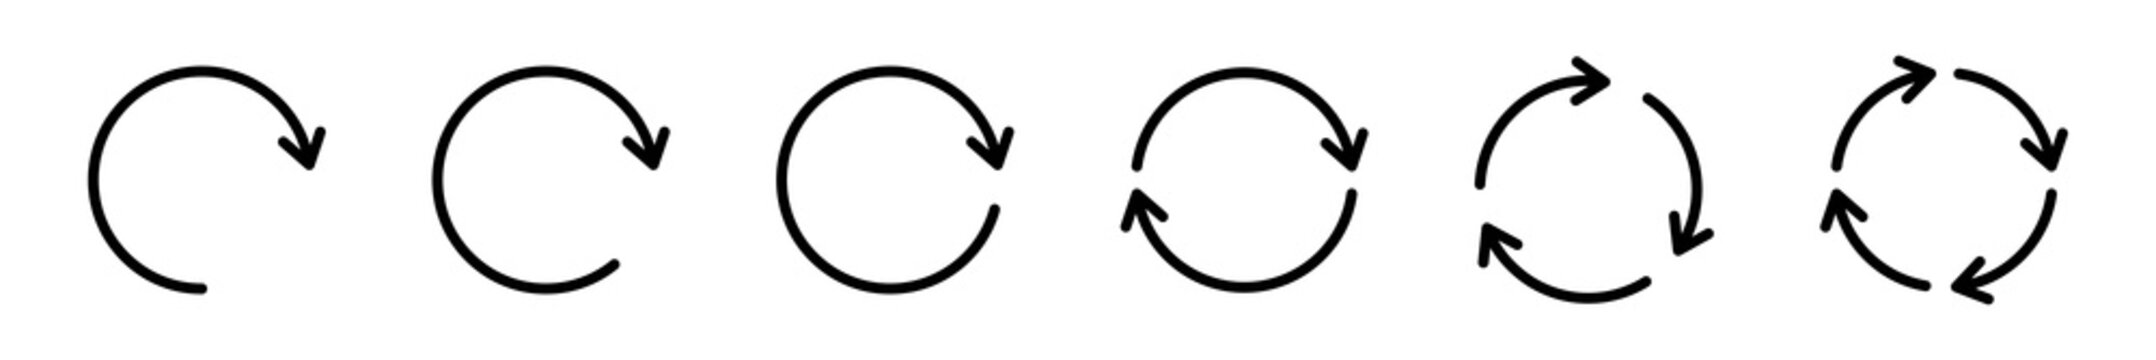 Arrow circle icon. Round arrow sign. Line arrow cycle elements